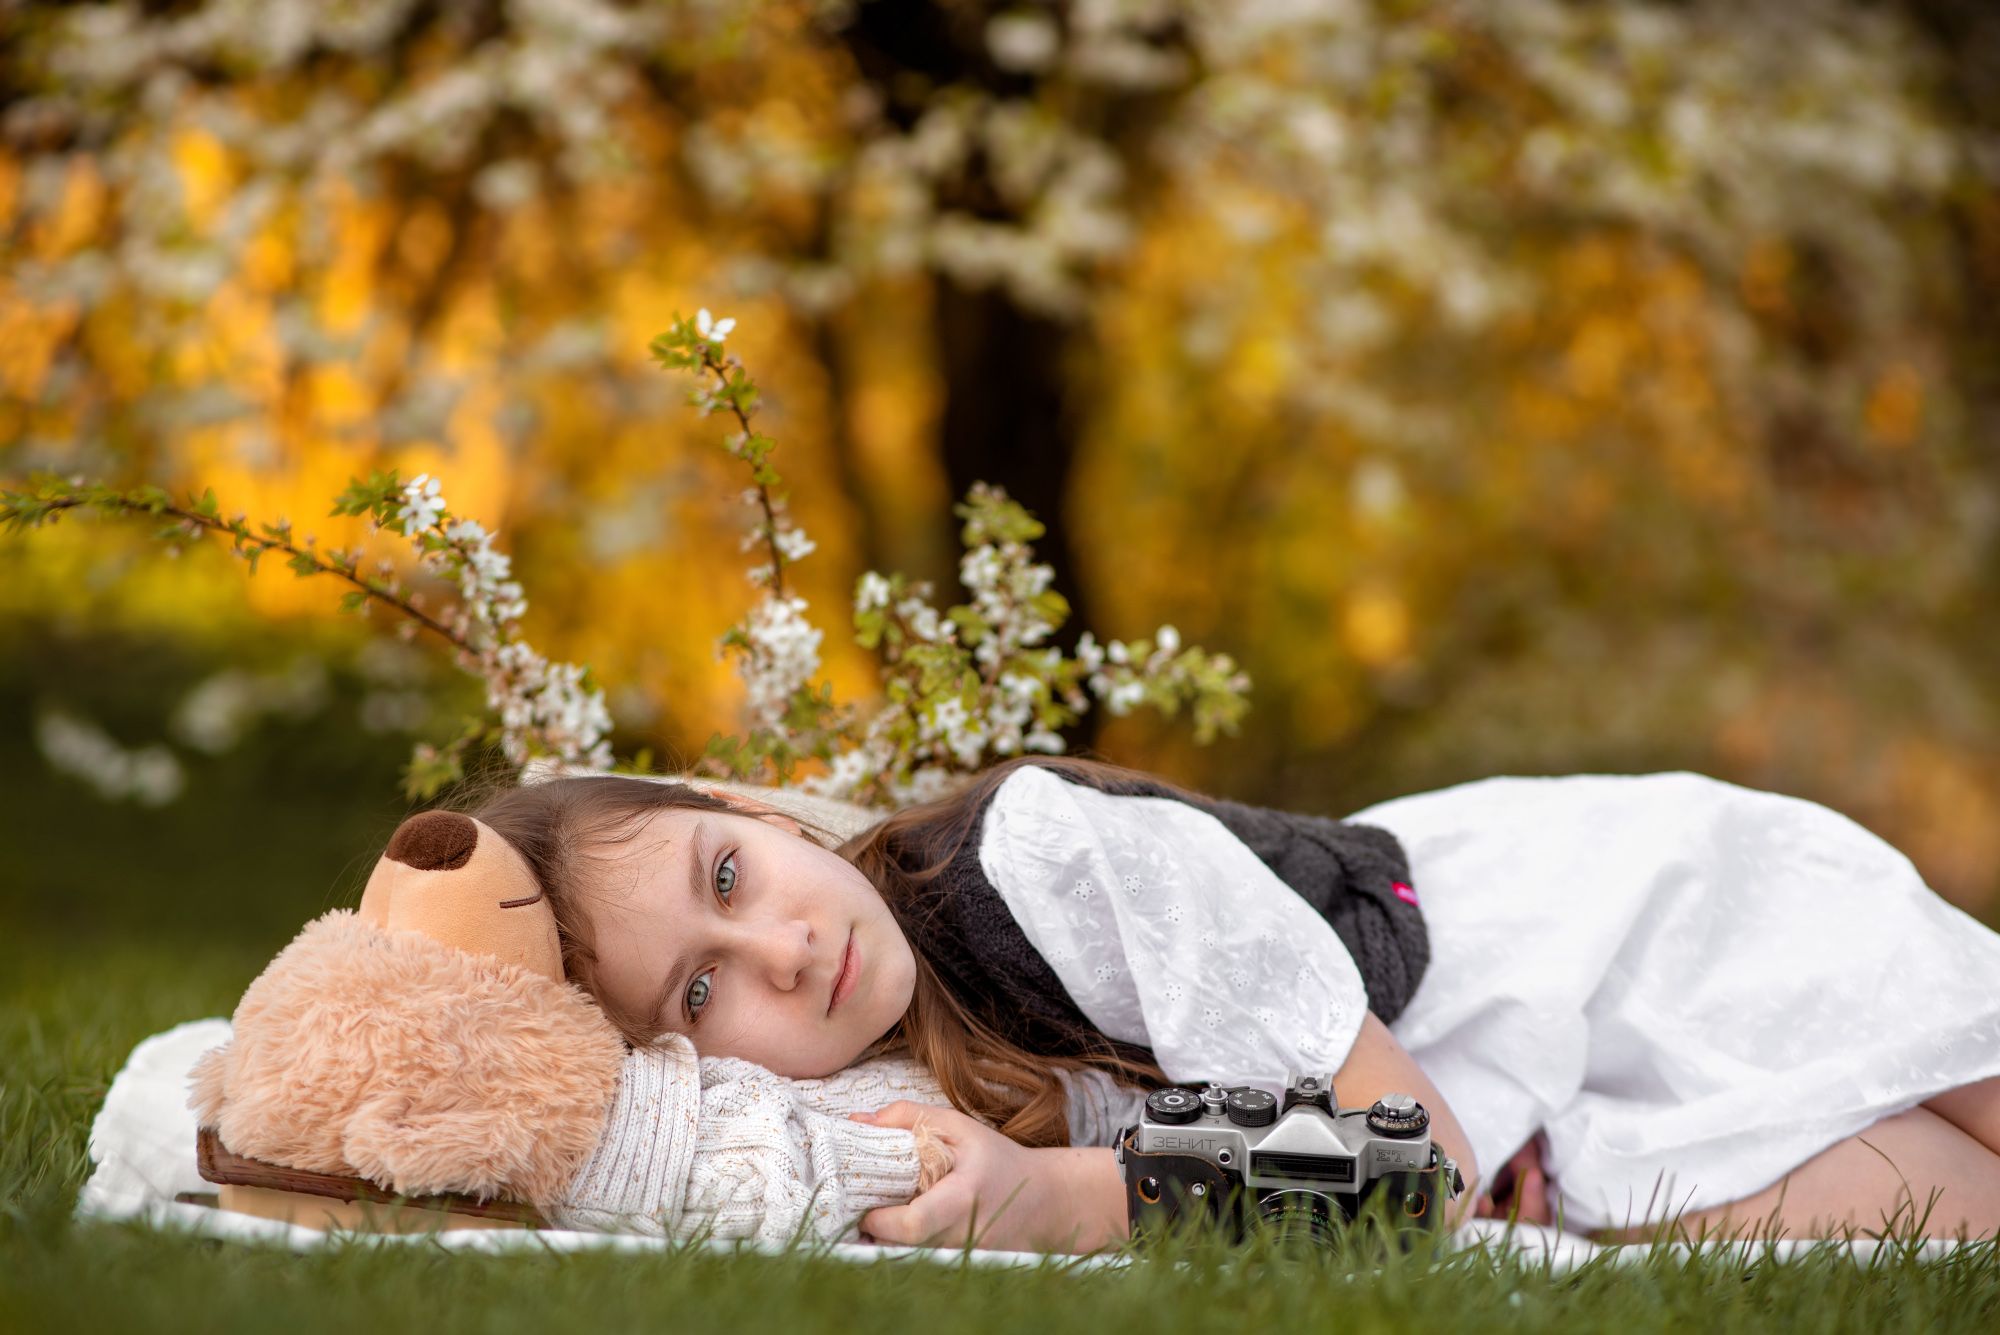 little girl teddy bear blooming tree sunset vintage camera orange greenery, Aliaksandra Klimchuk